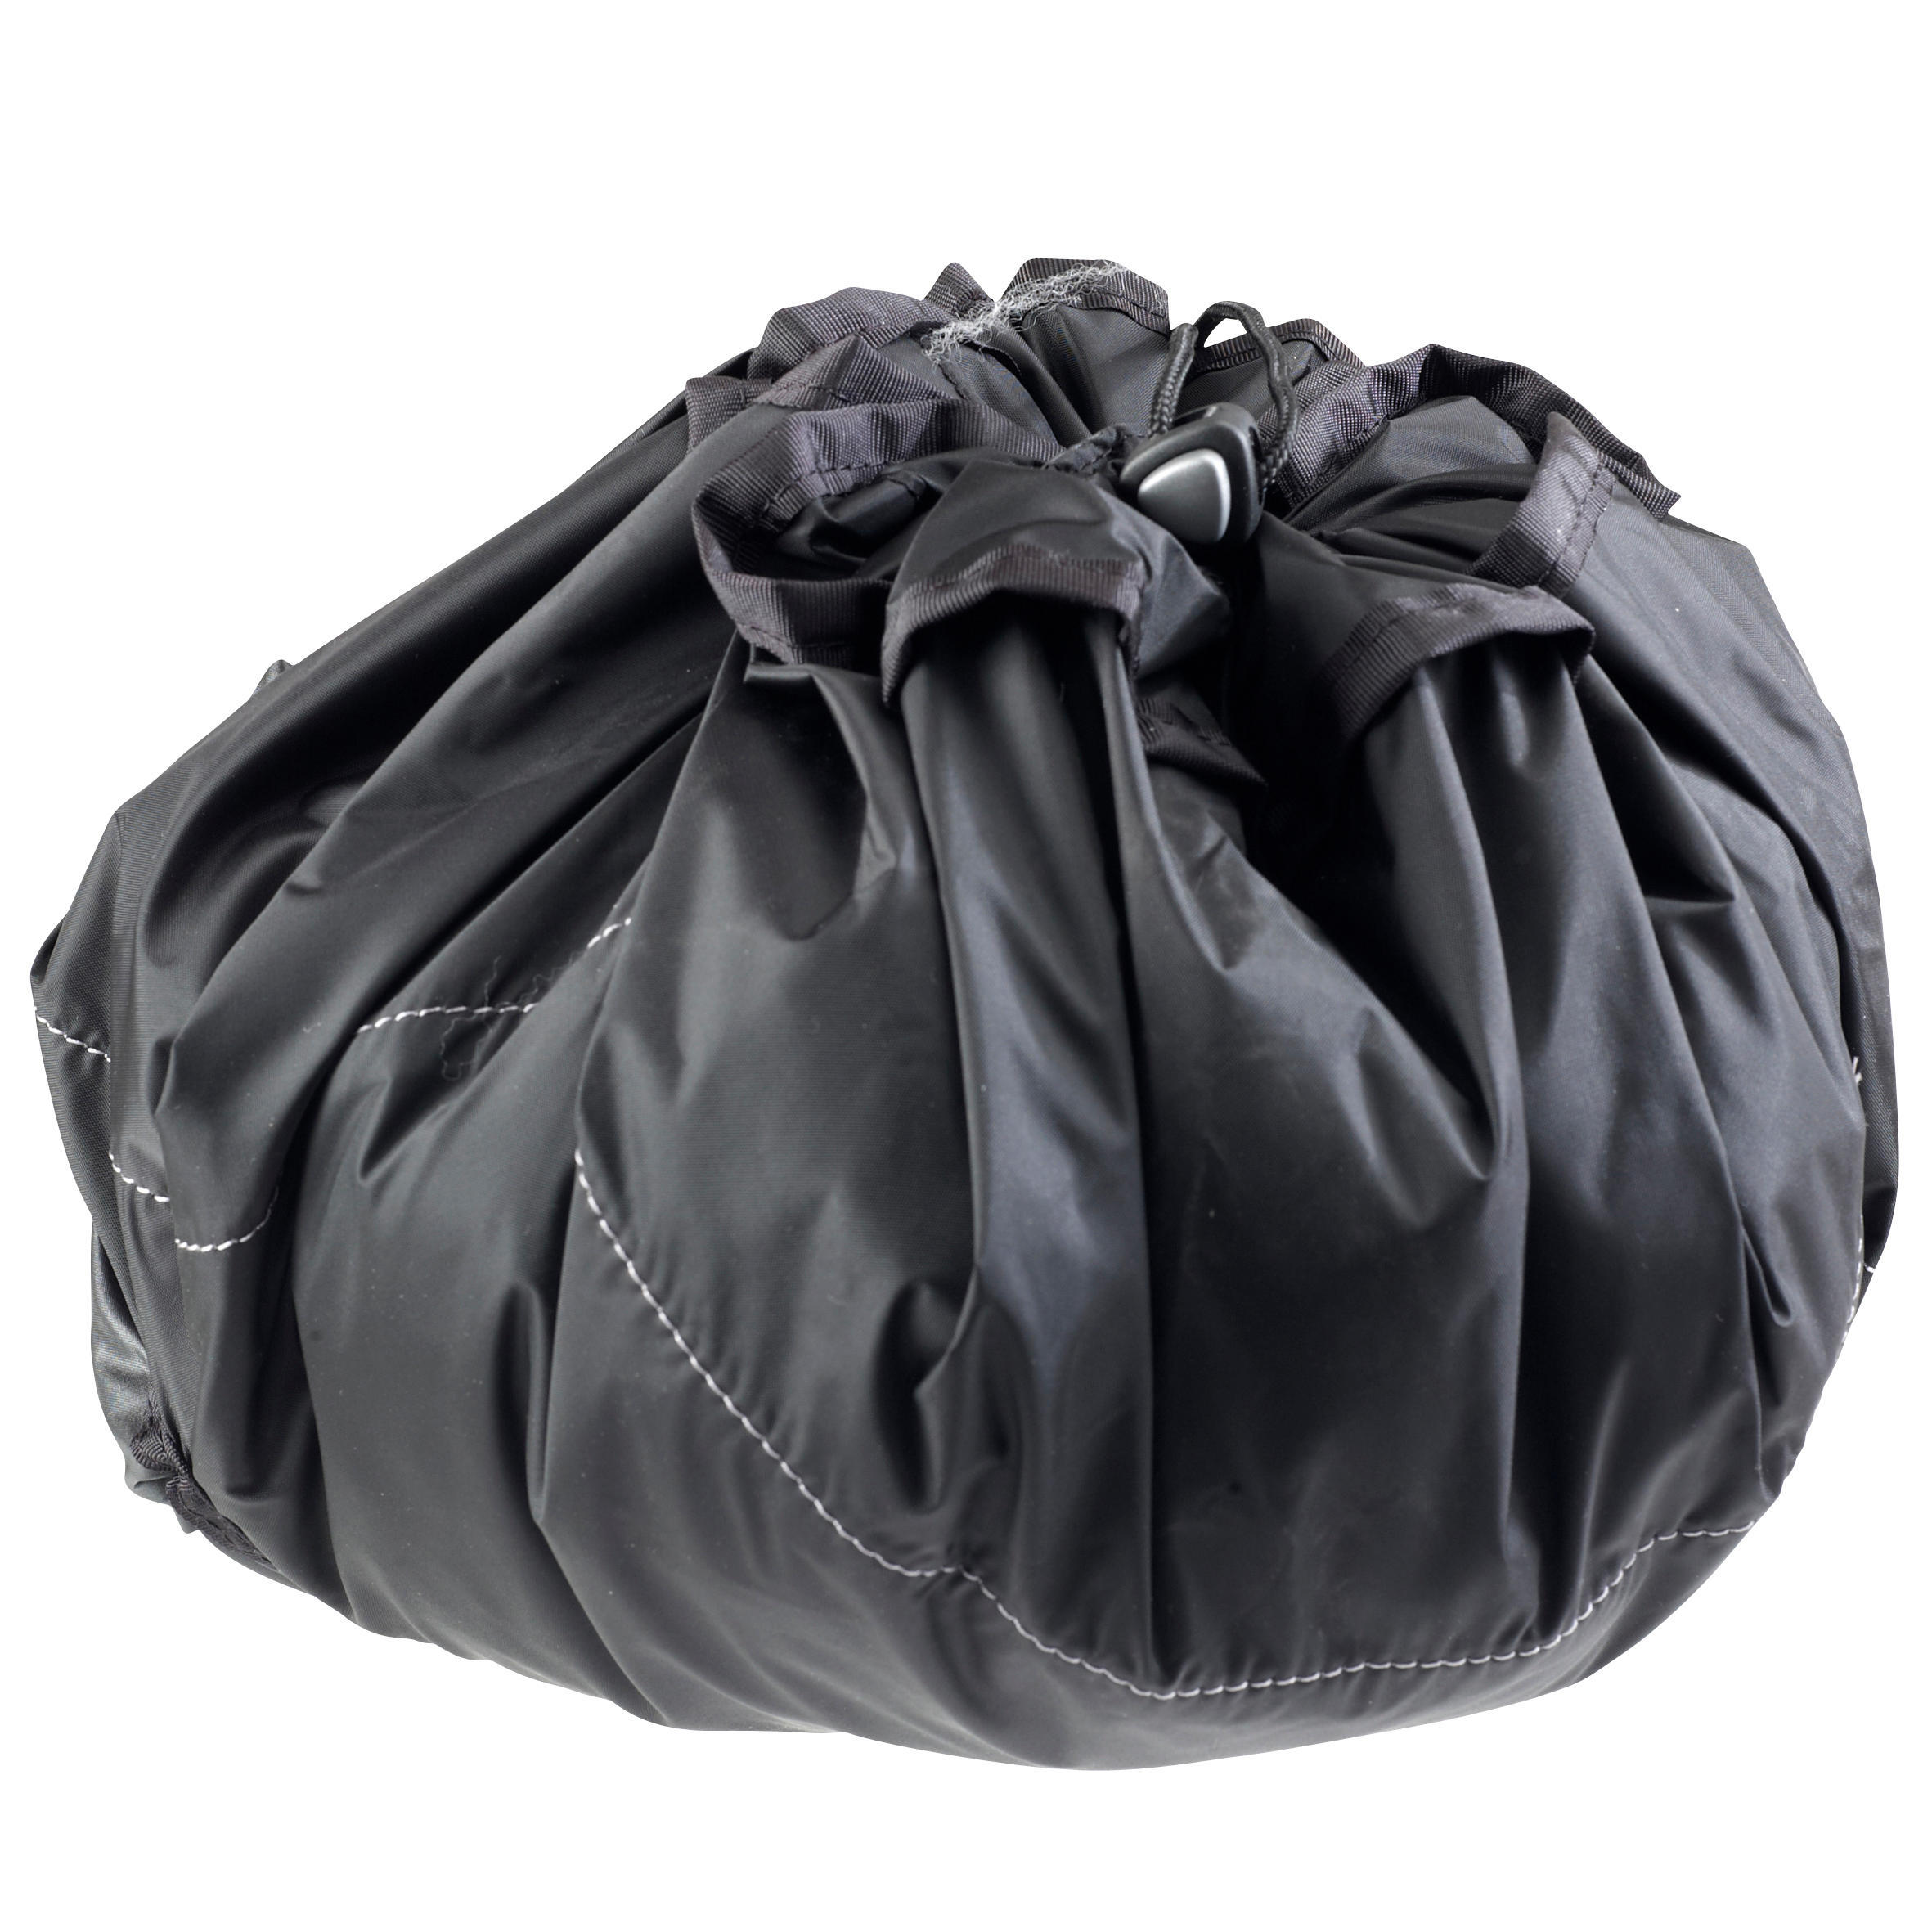 PTWO Fitness Bag - Black 4/5